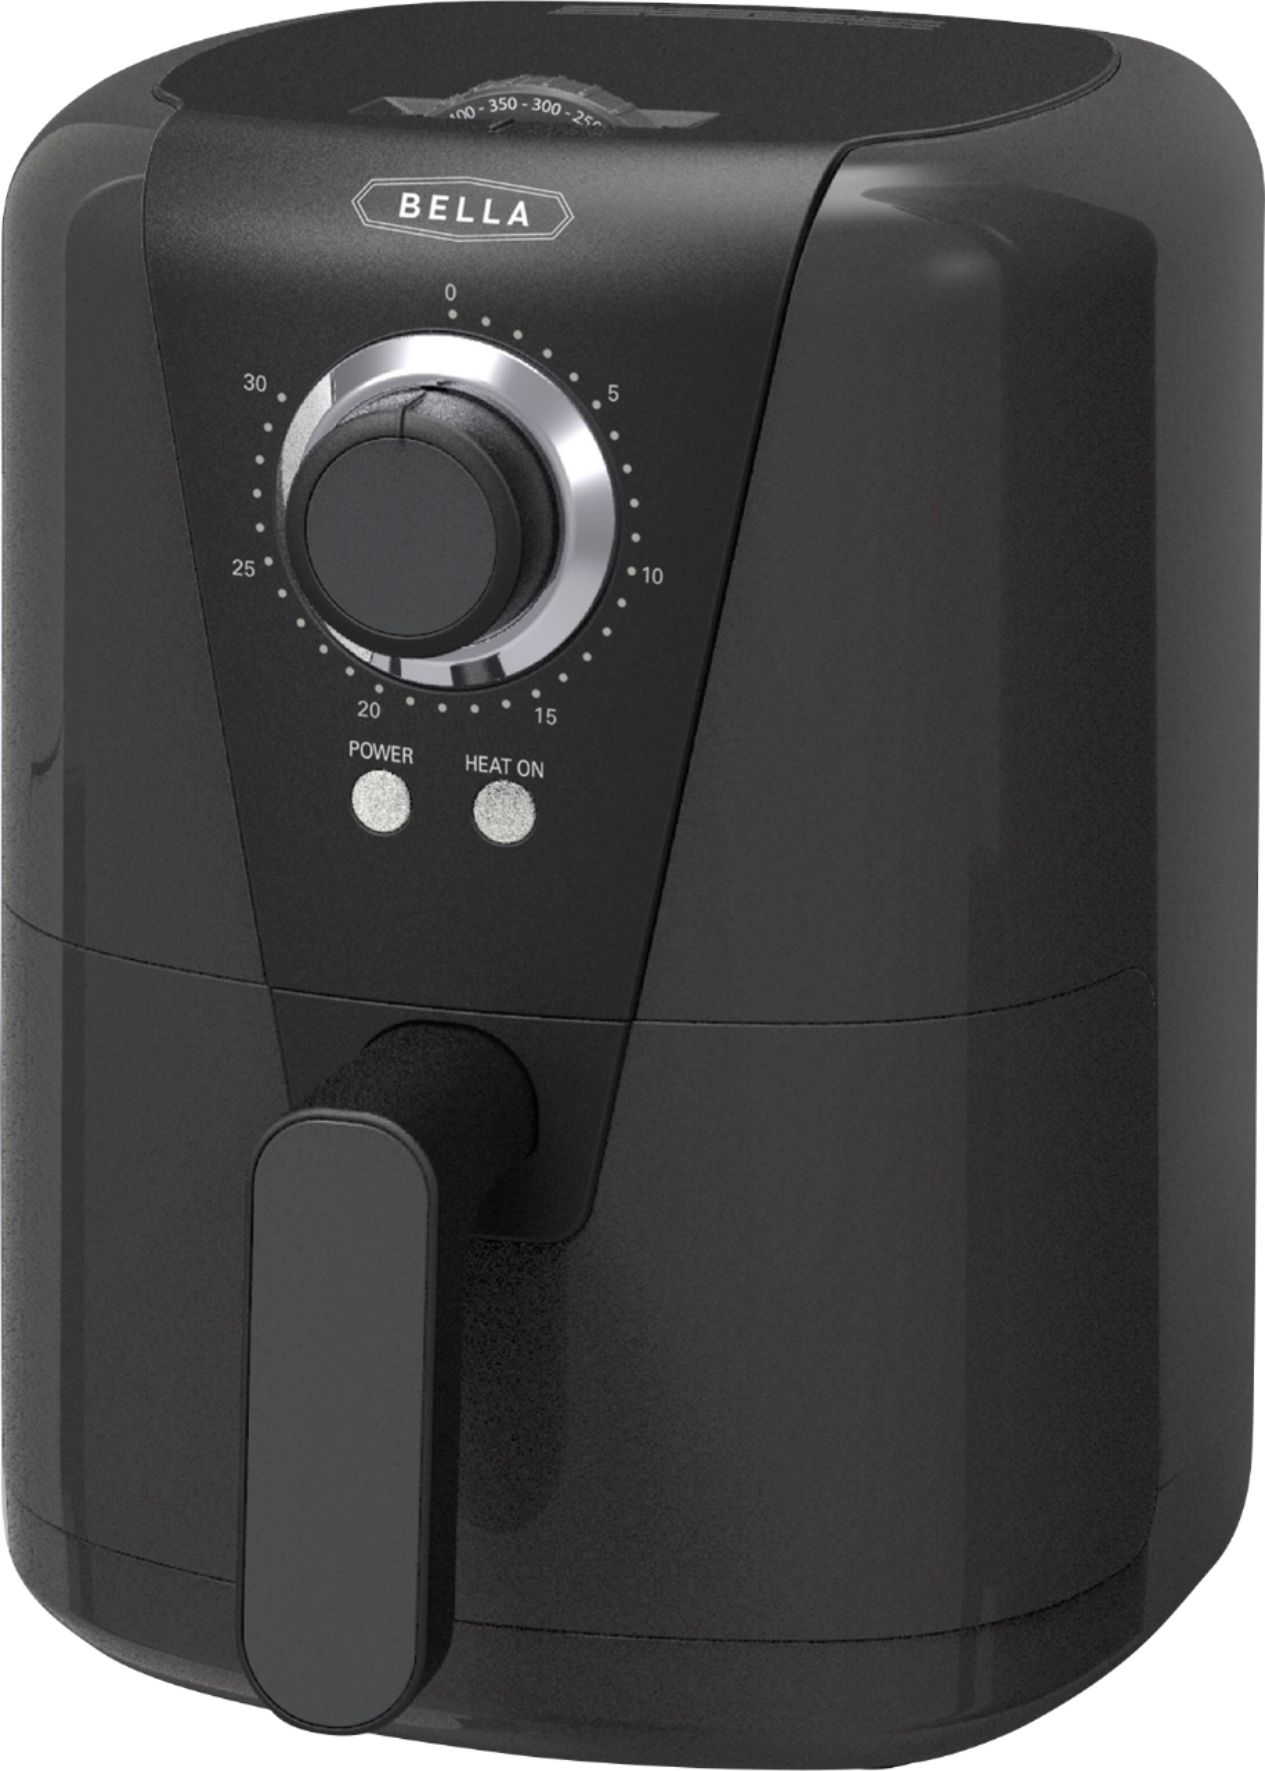 Angle View: Insignia™ - 10 Qt. Digital Air Fryer Oven - Black